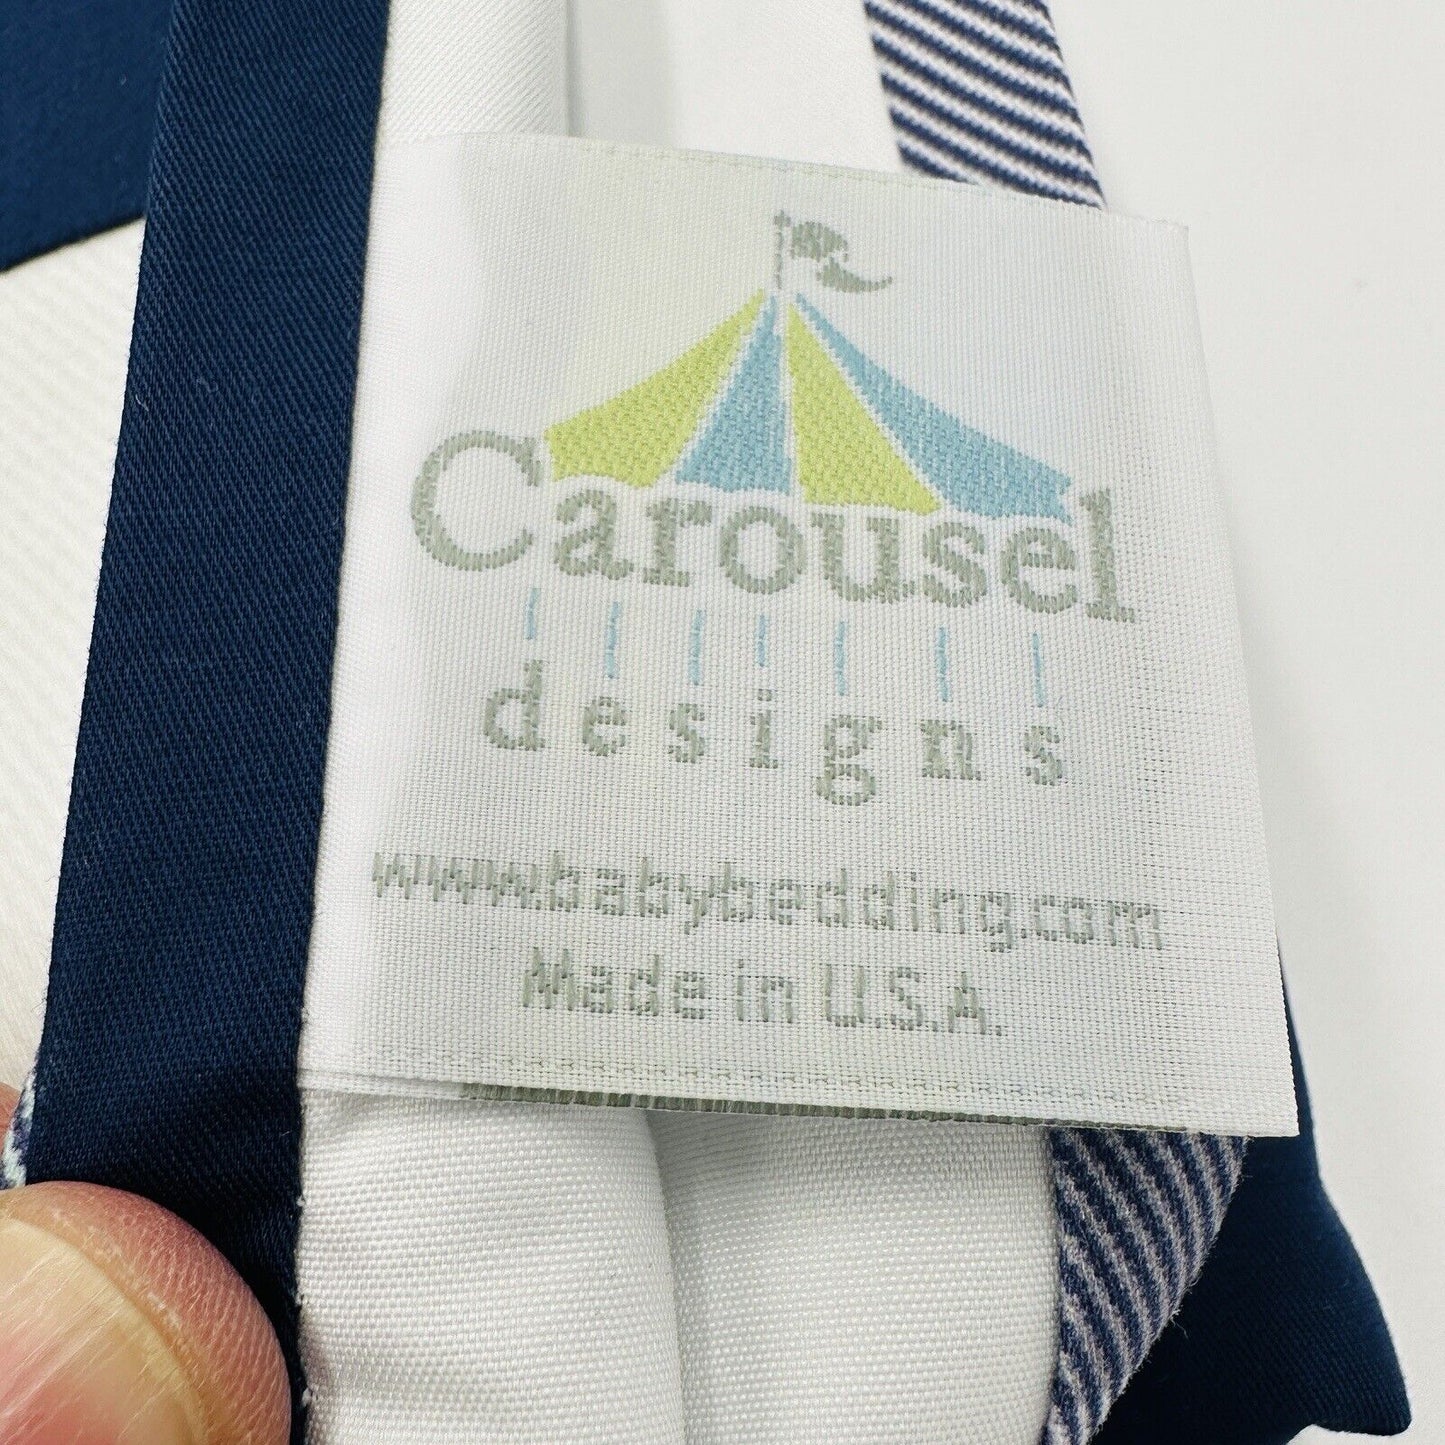 Carousel Designs Curtains Panels Baby Plaid Blue Green Orange Blackout Bedroom